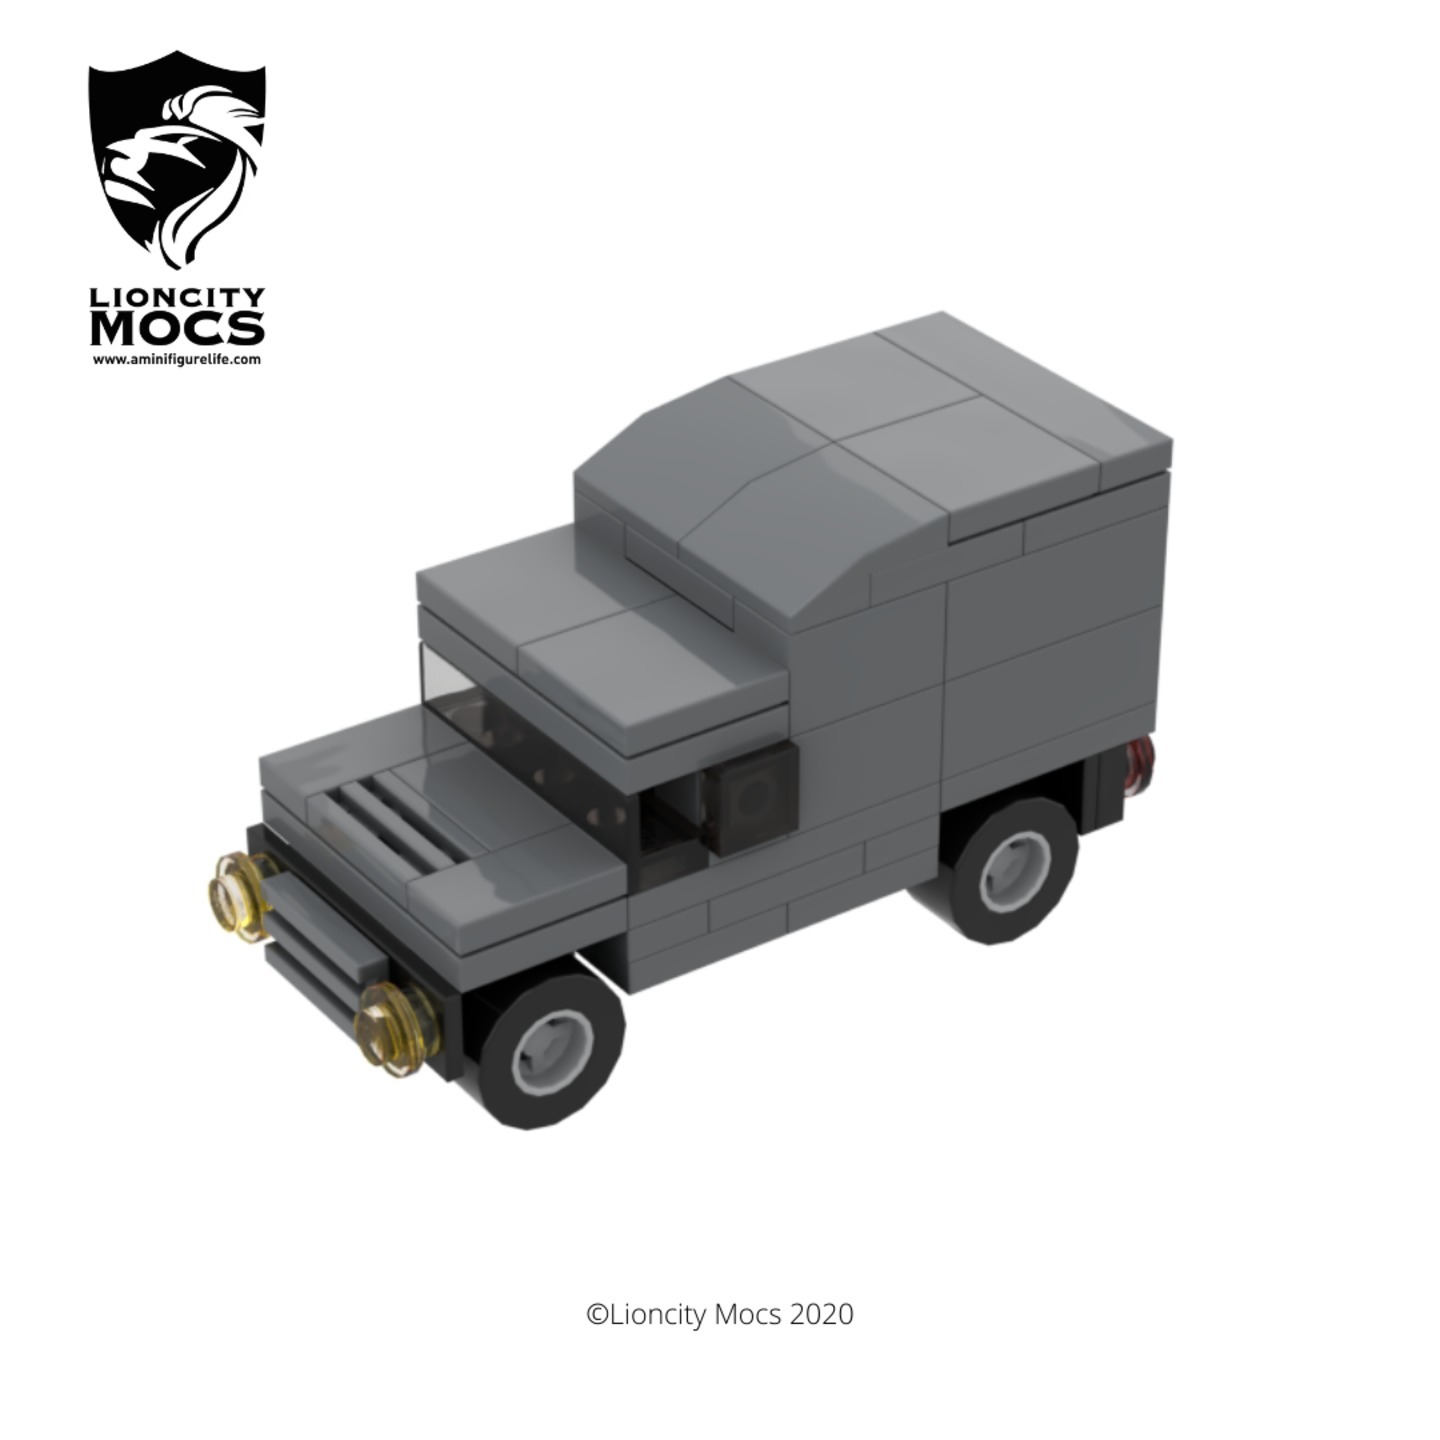  [PDF Instructions Only] Humvee Cargo Mini Vehicle